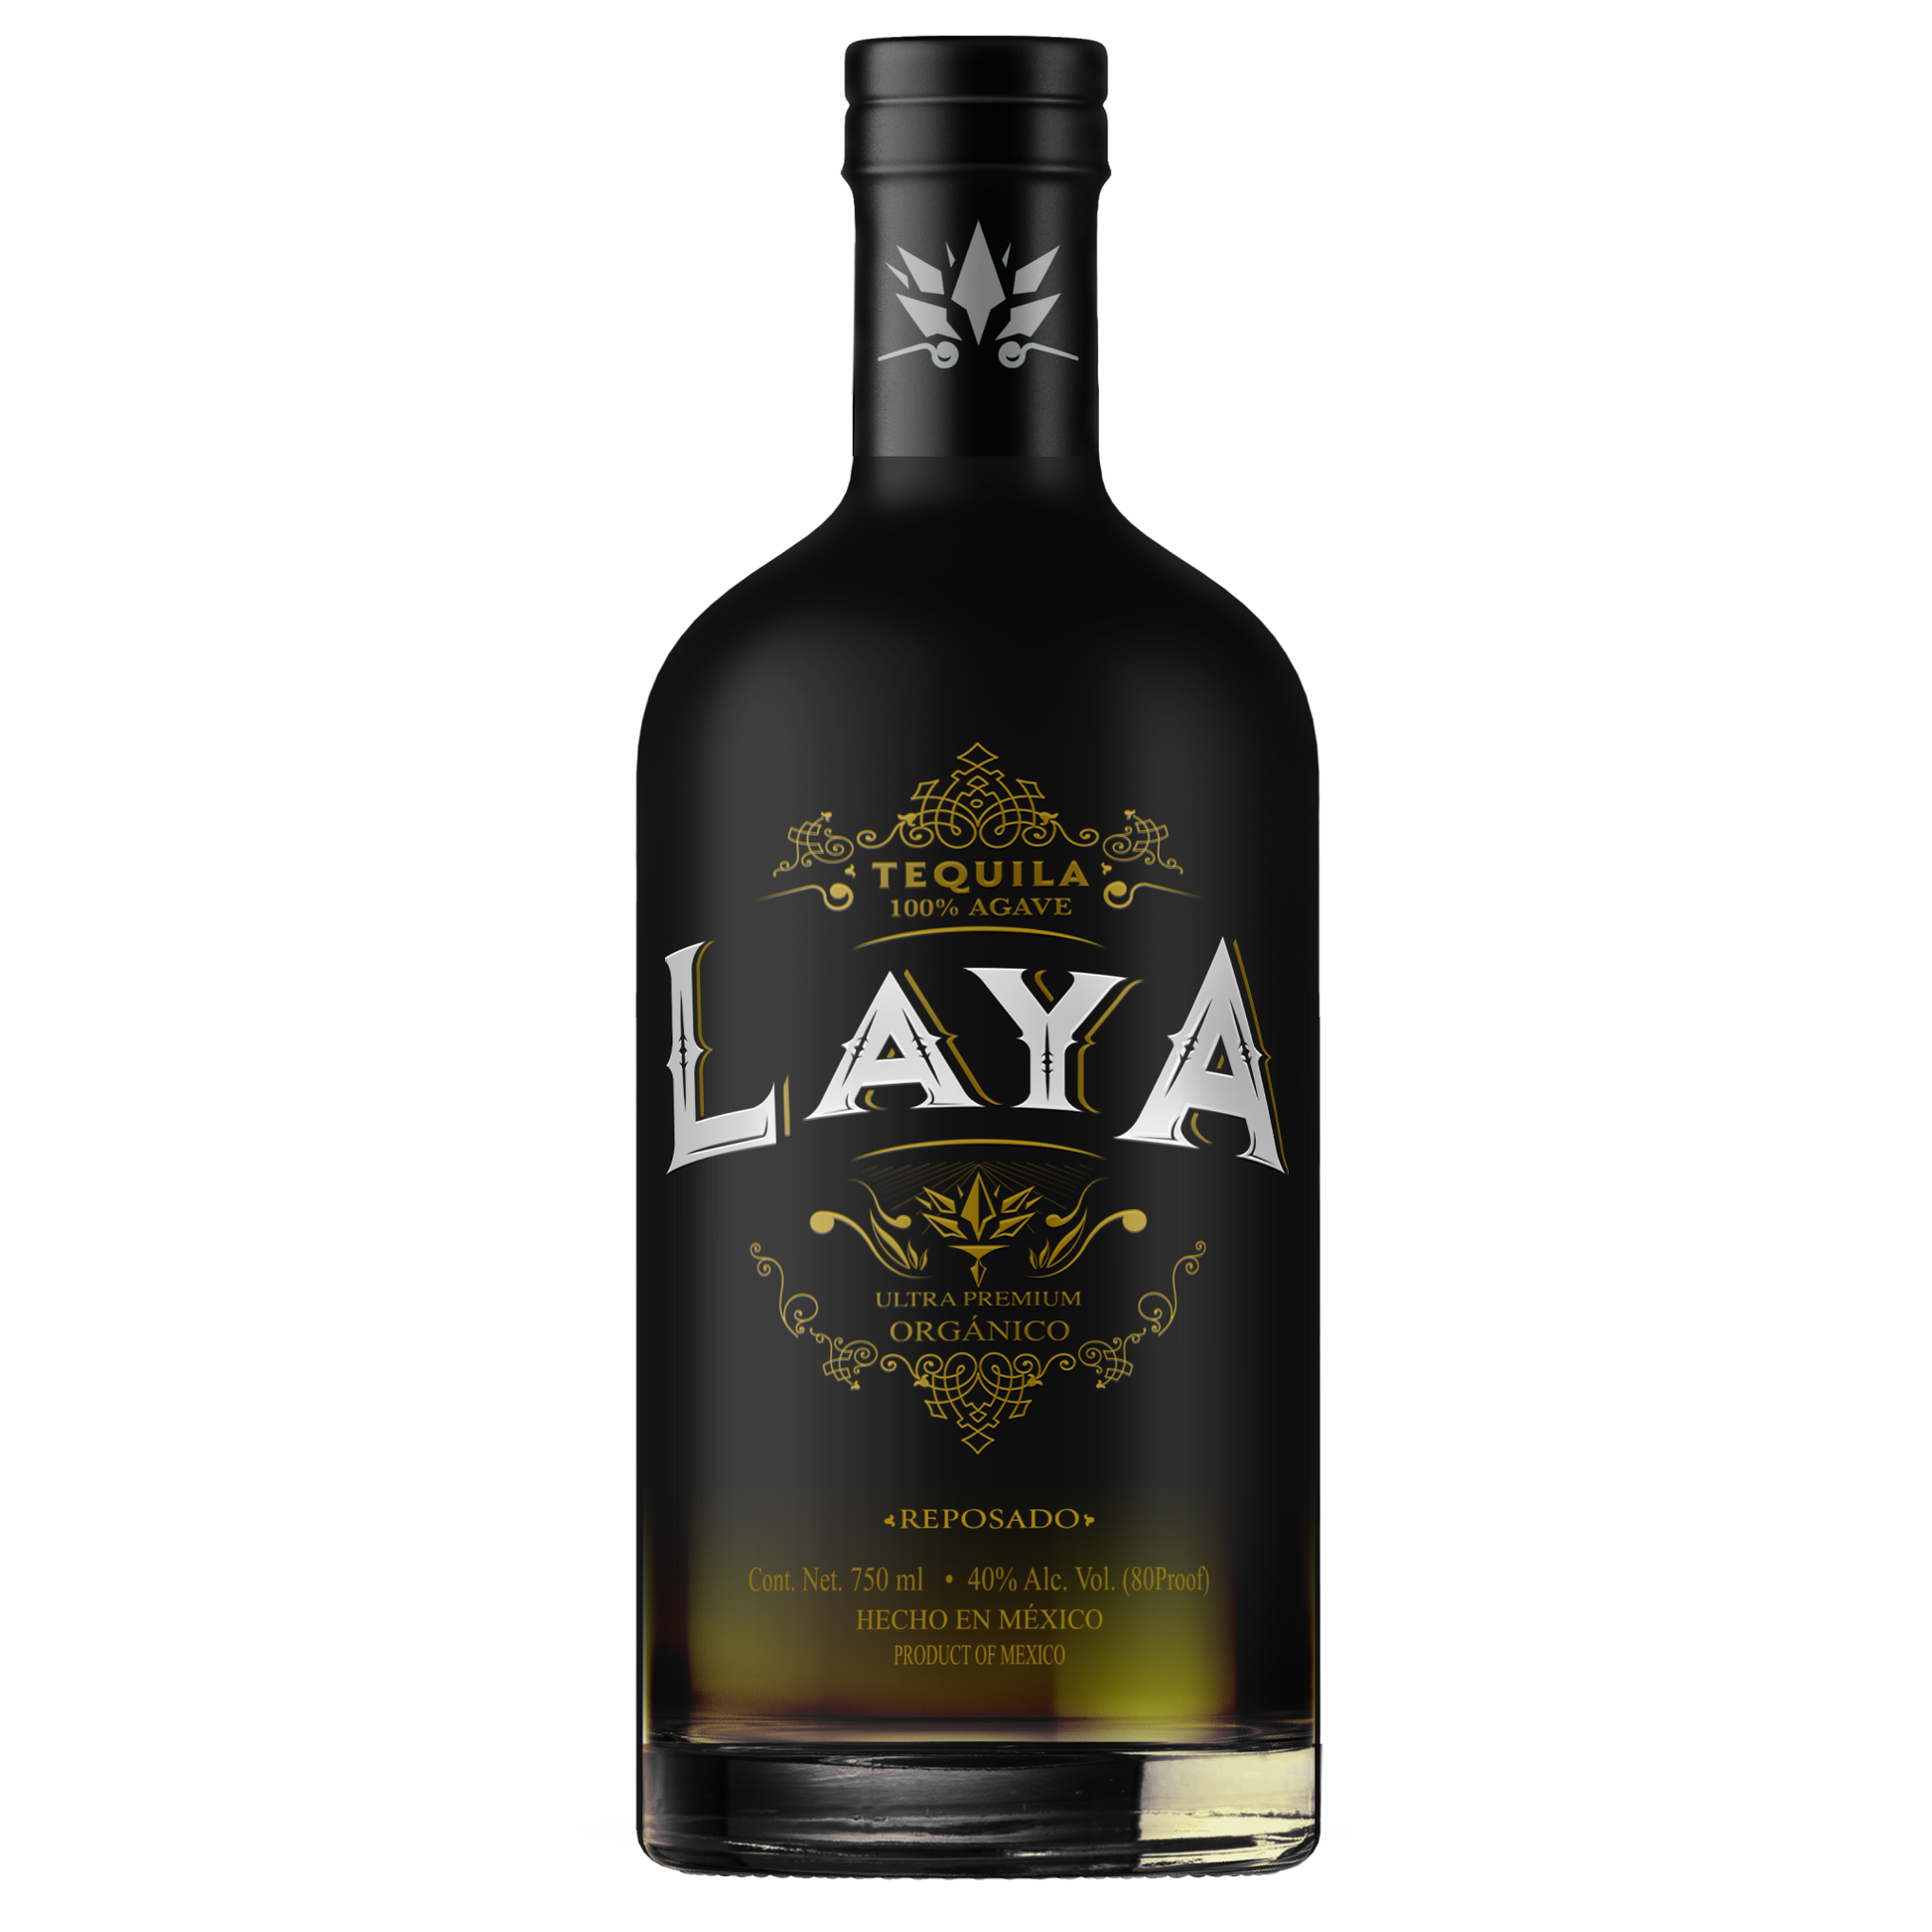 Laya Reposado - Liquor Geeks